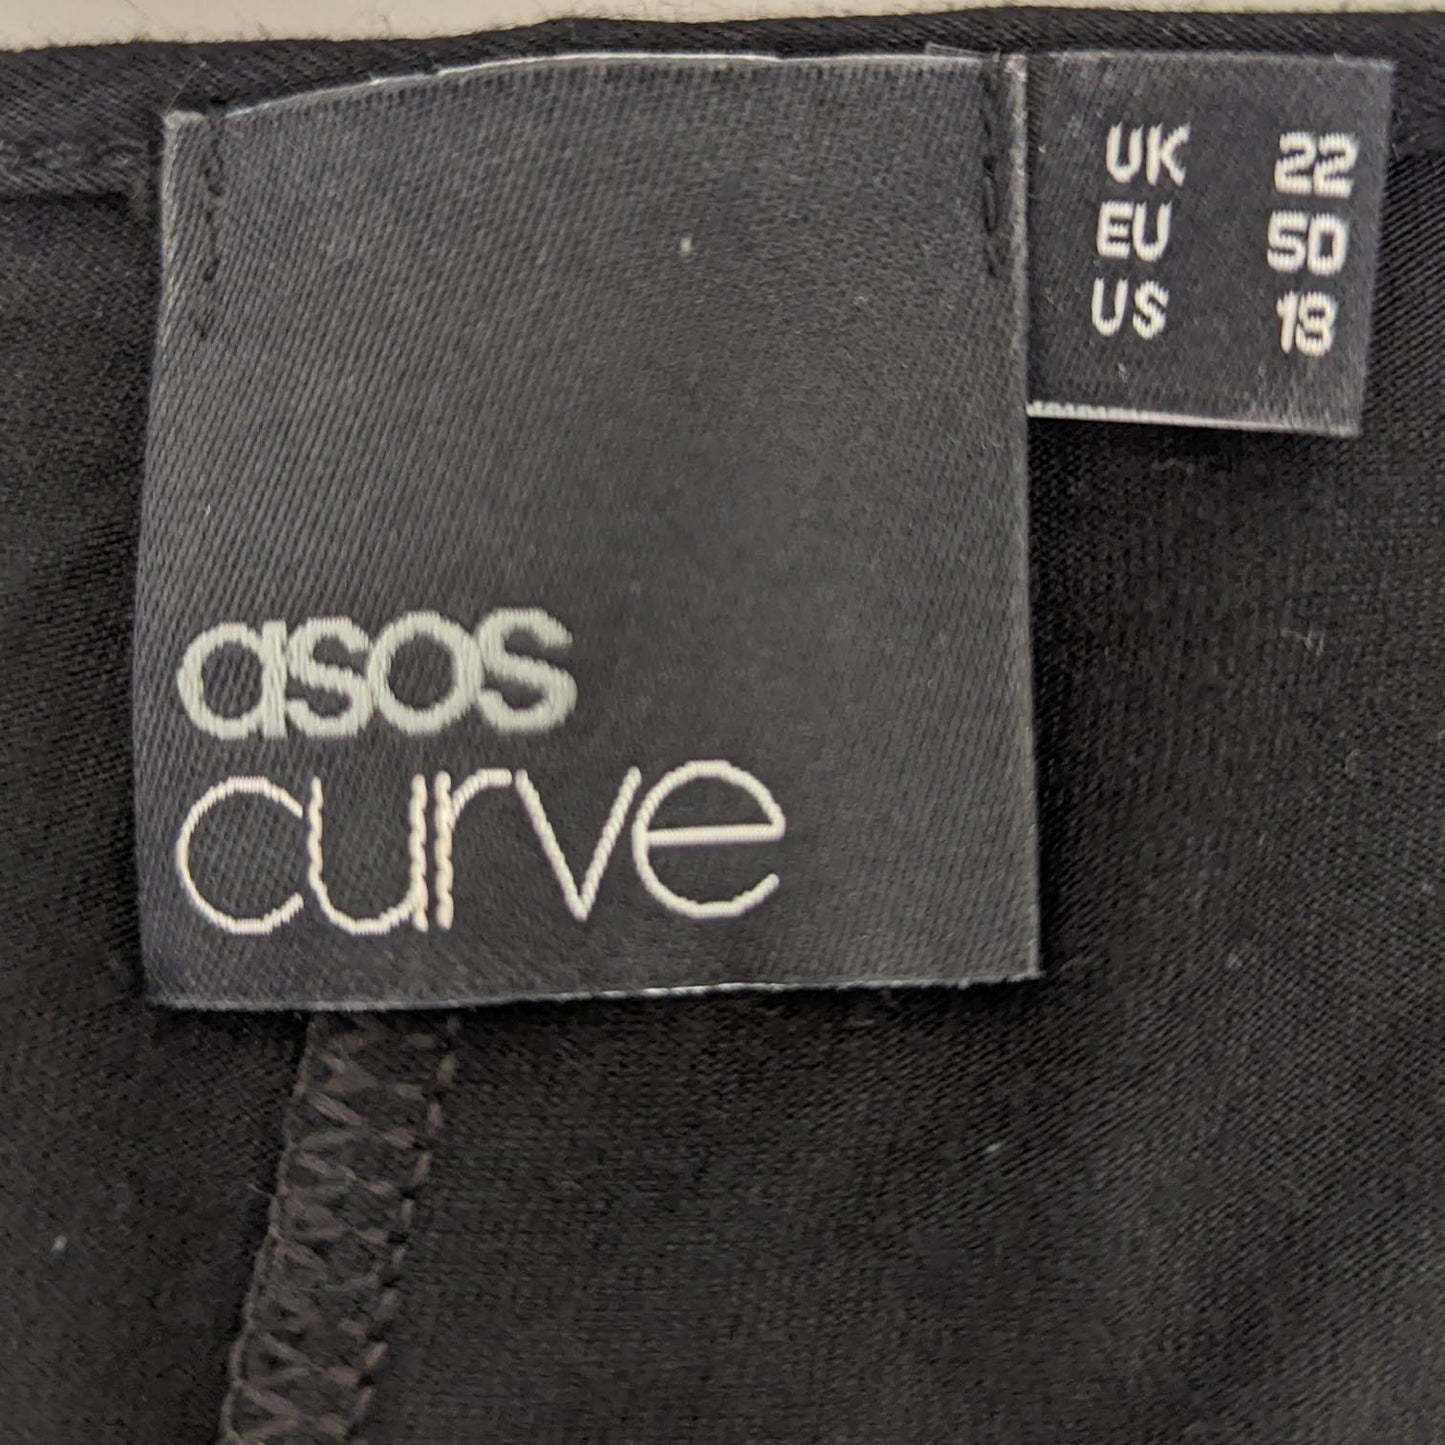 Asos Curve Plus Size 18 Black Blue Fringe Tank Top Jersey Knit Soft